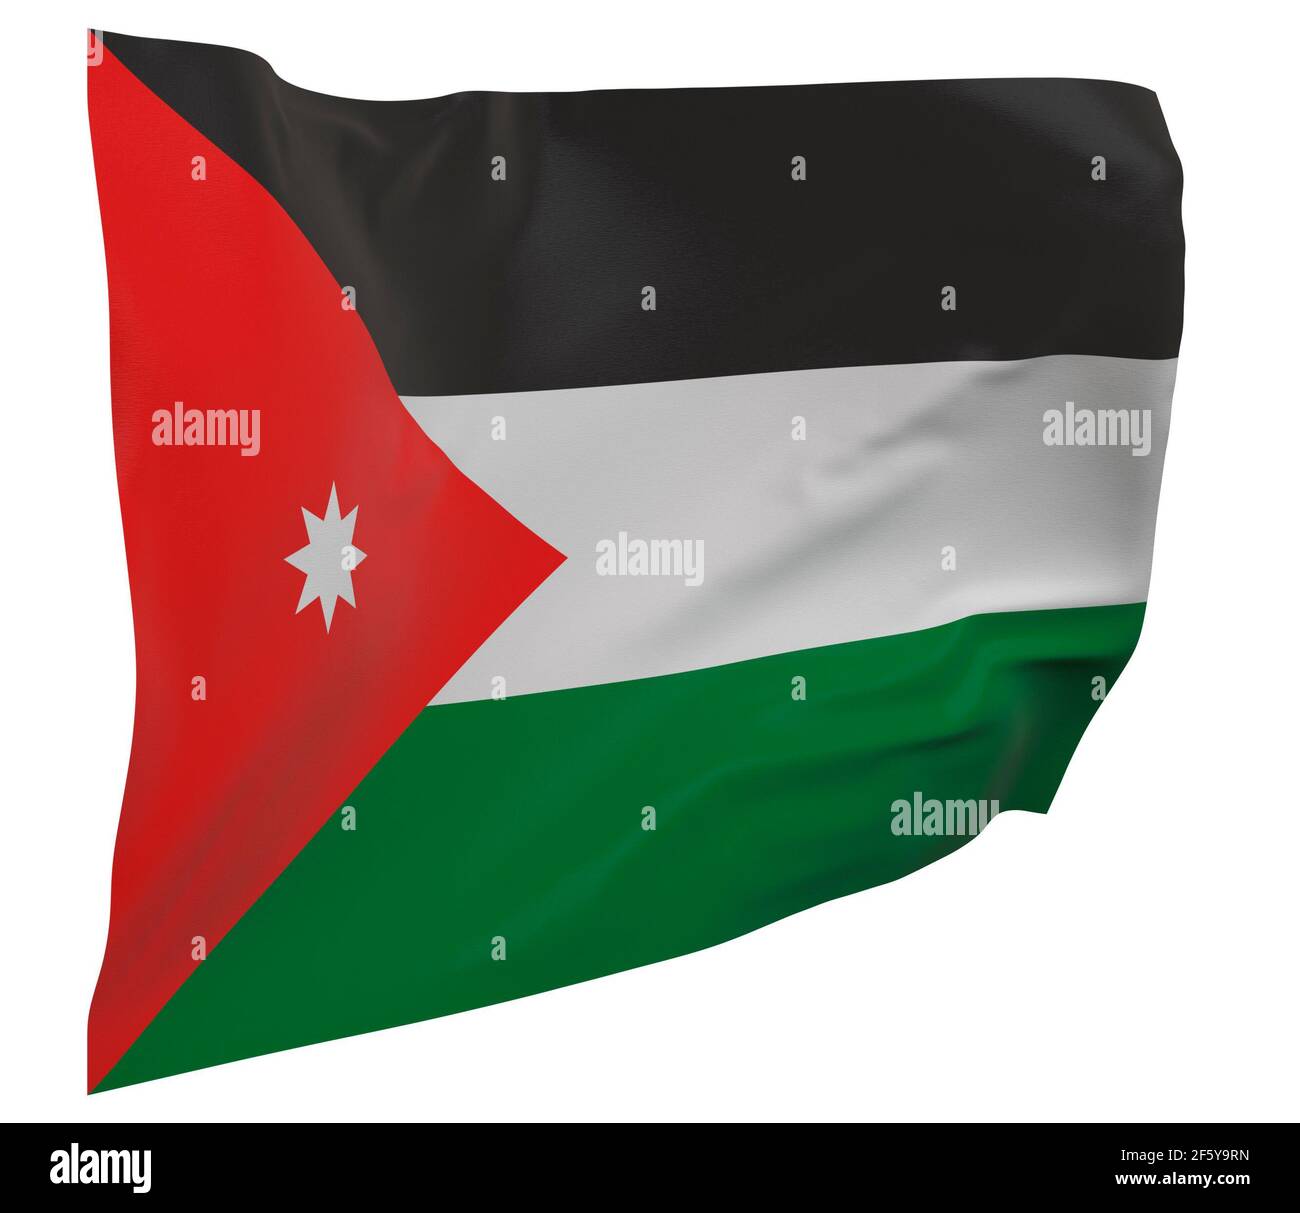 Jordanflagge isoliert. Winkendes Banner. Nationalflagge Jordaniens Stockfoto